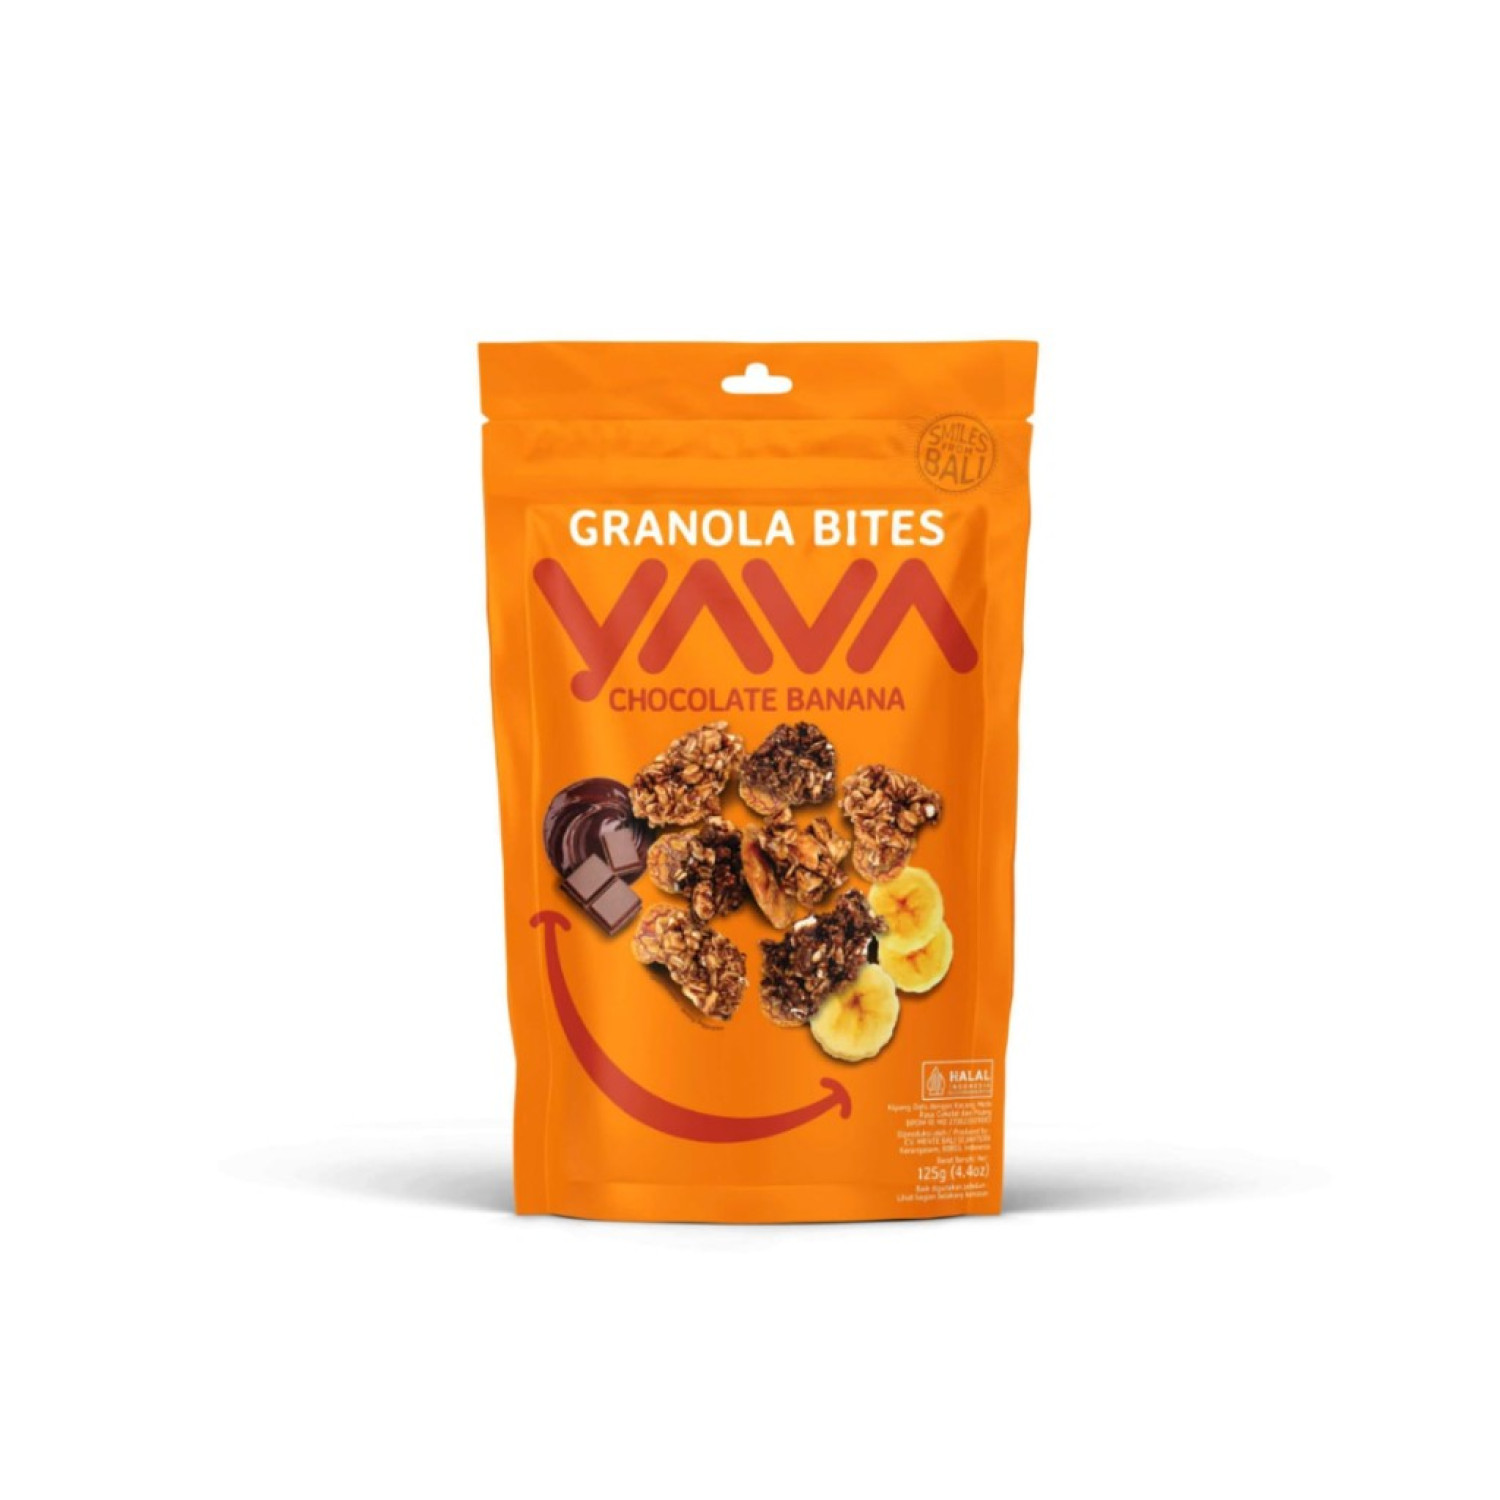 Yava Yava Granola Bites - Chocolate Banana